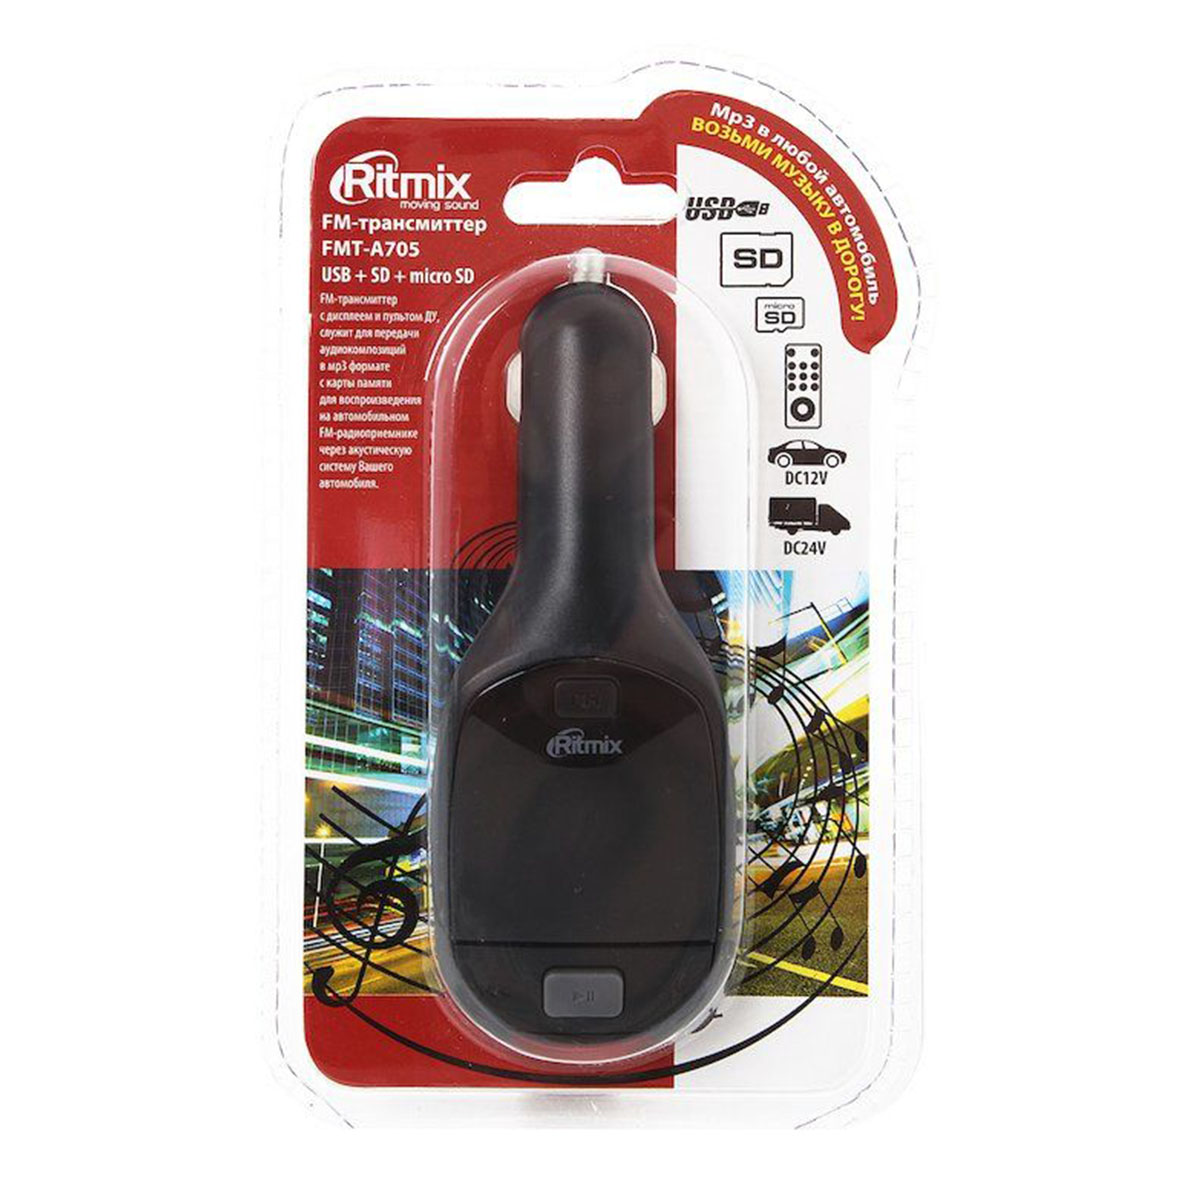 FM-трансмиттер RITMIX FMT-A720, поддержка microSD, SD, и USB-накопителей..